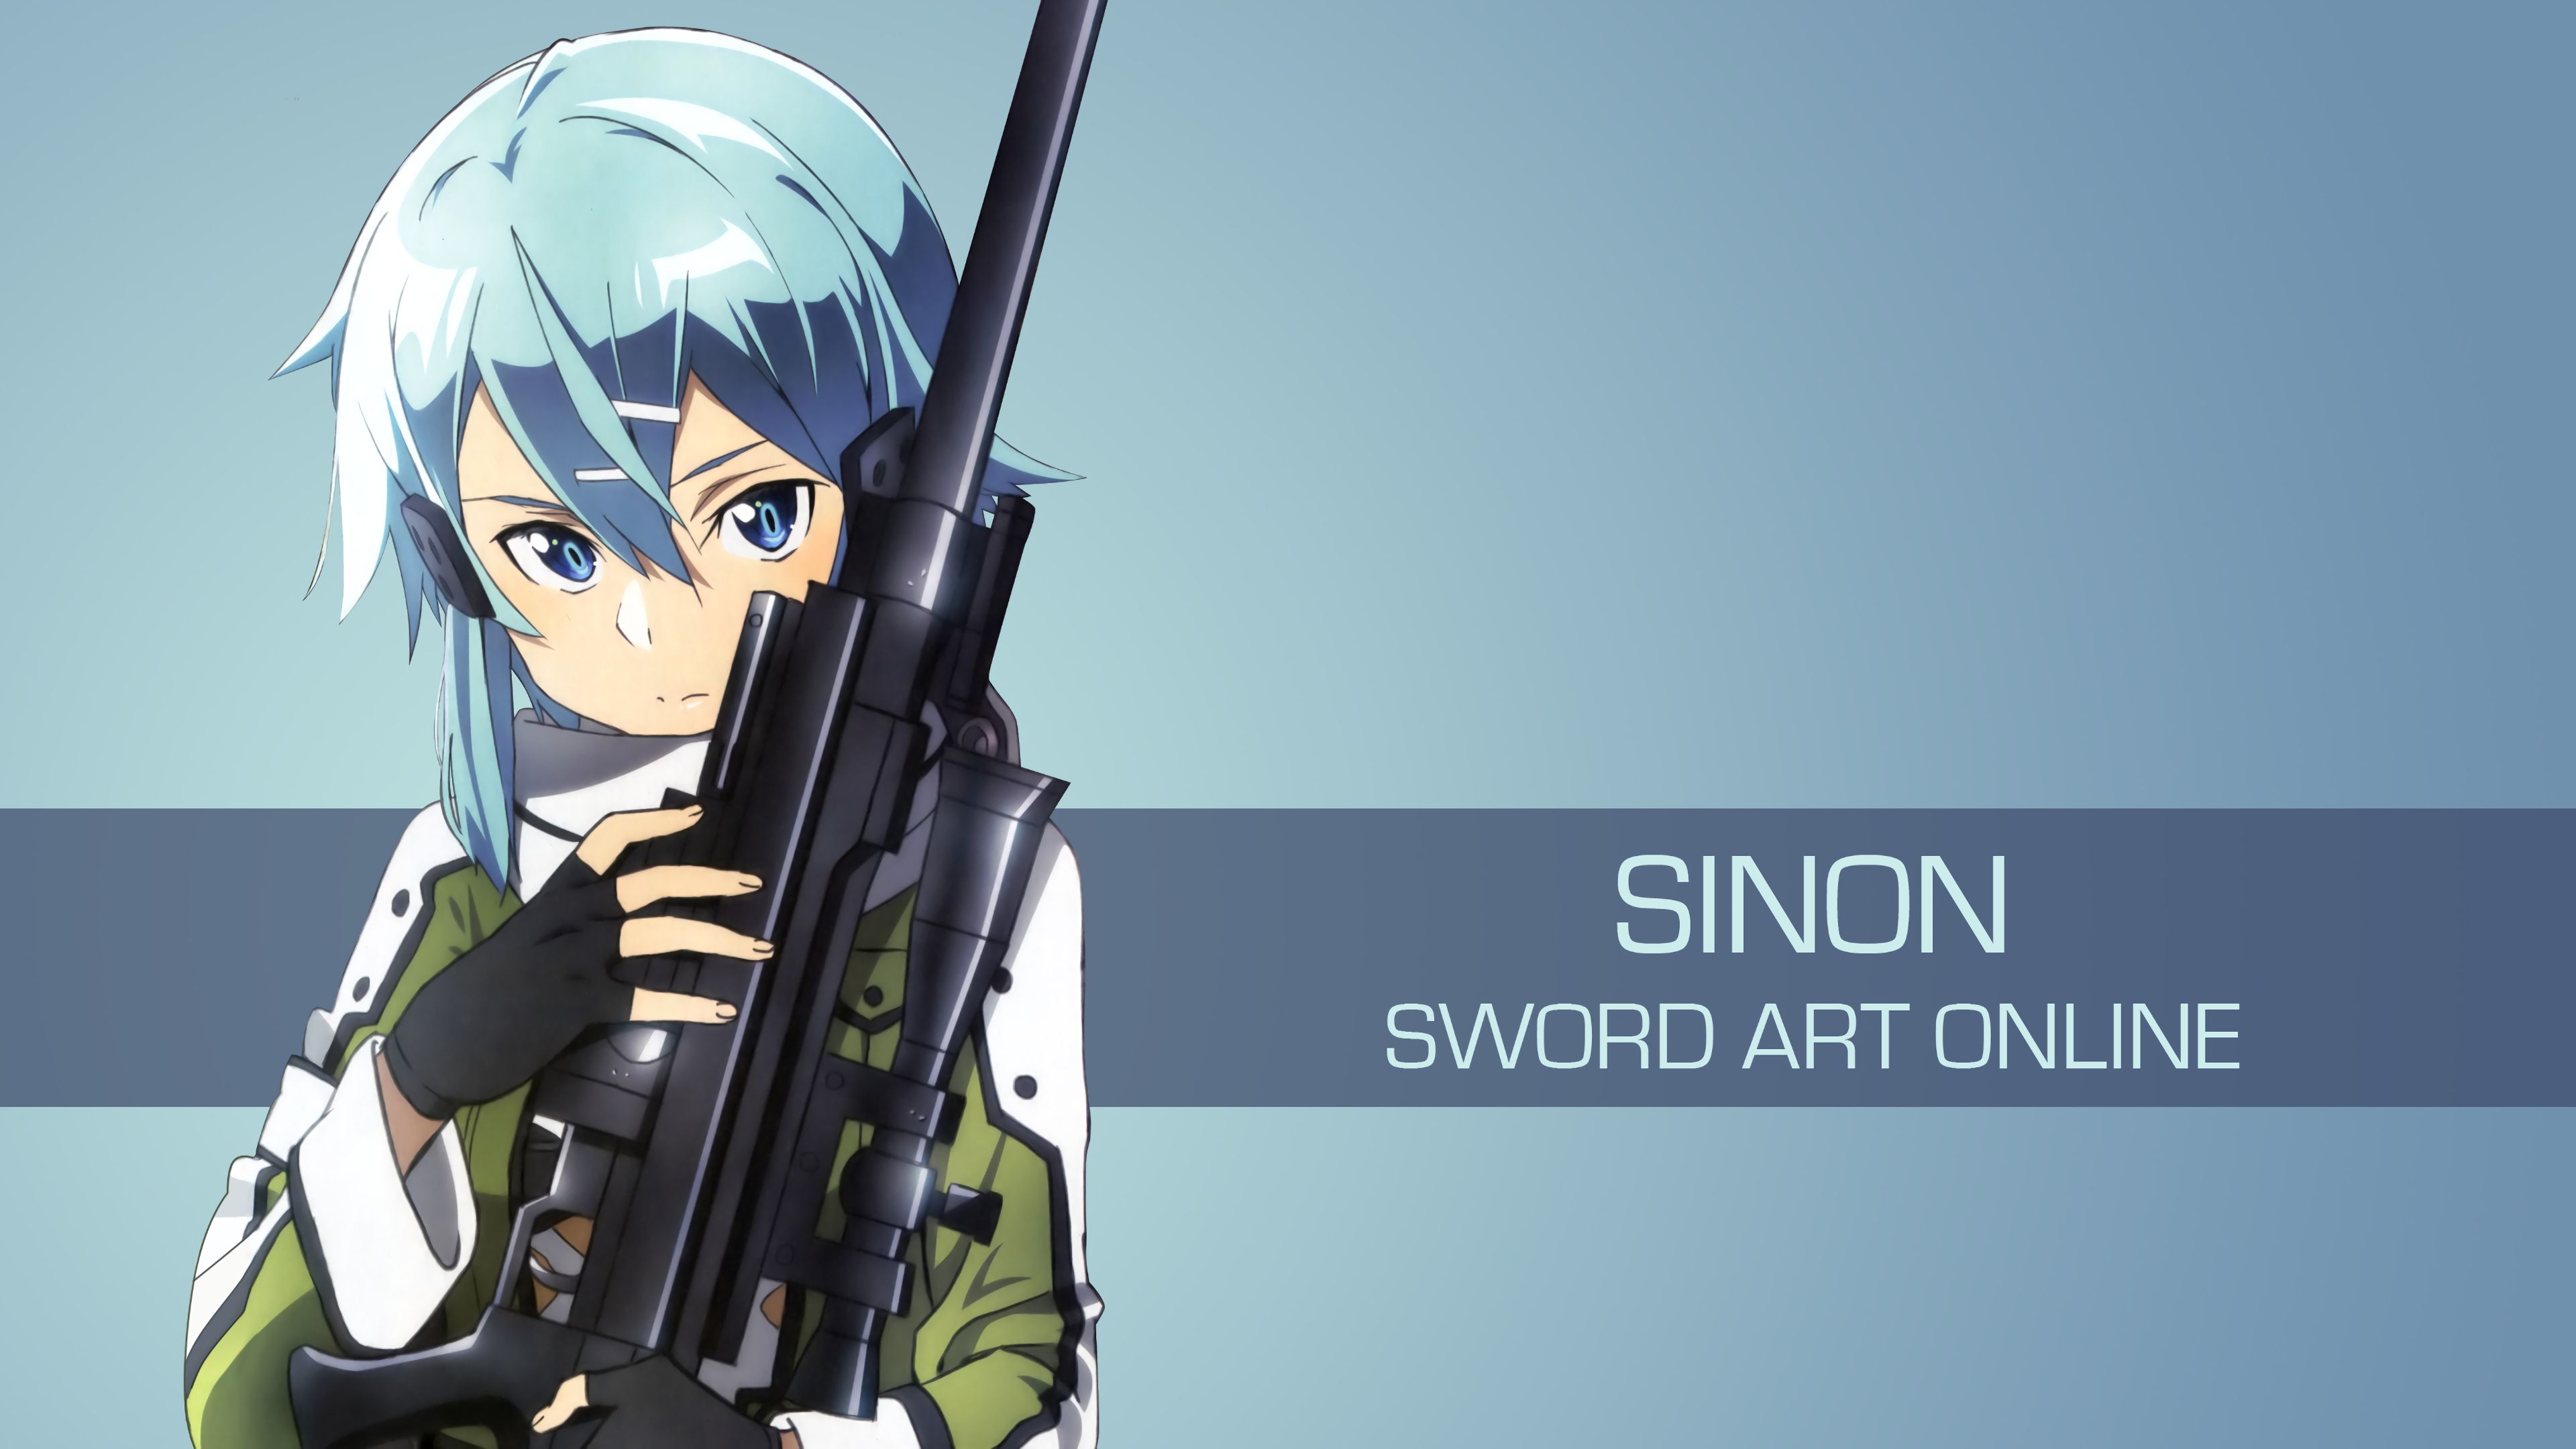 Descarga gratis la imagen Sword Art Online, Animado, Espada Arte En Línea Ii, Sinon (Arte De Espada En Línea), Arte De Espada En Línea en el escritorio de tu PC